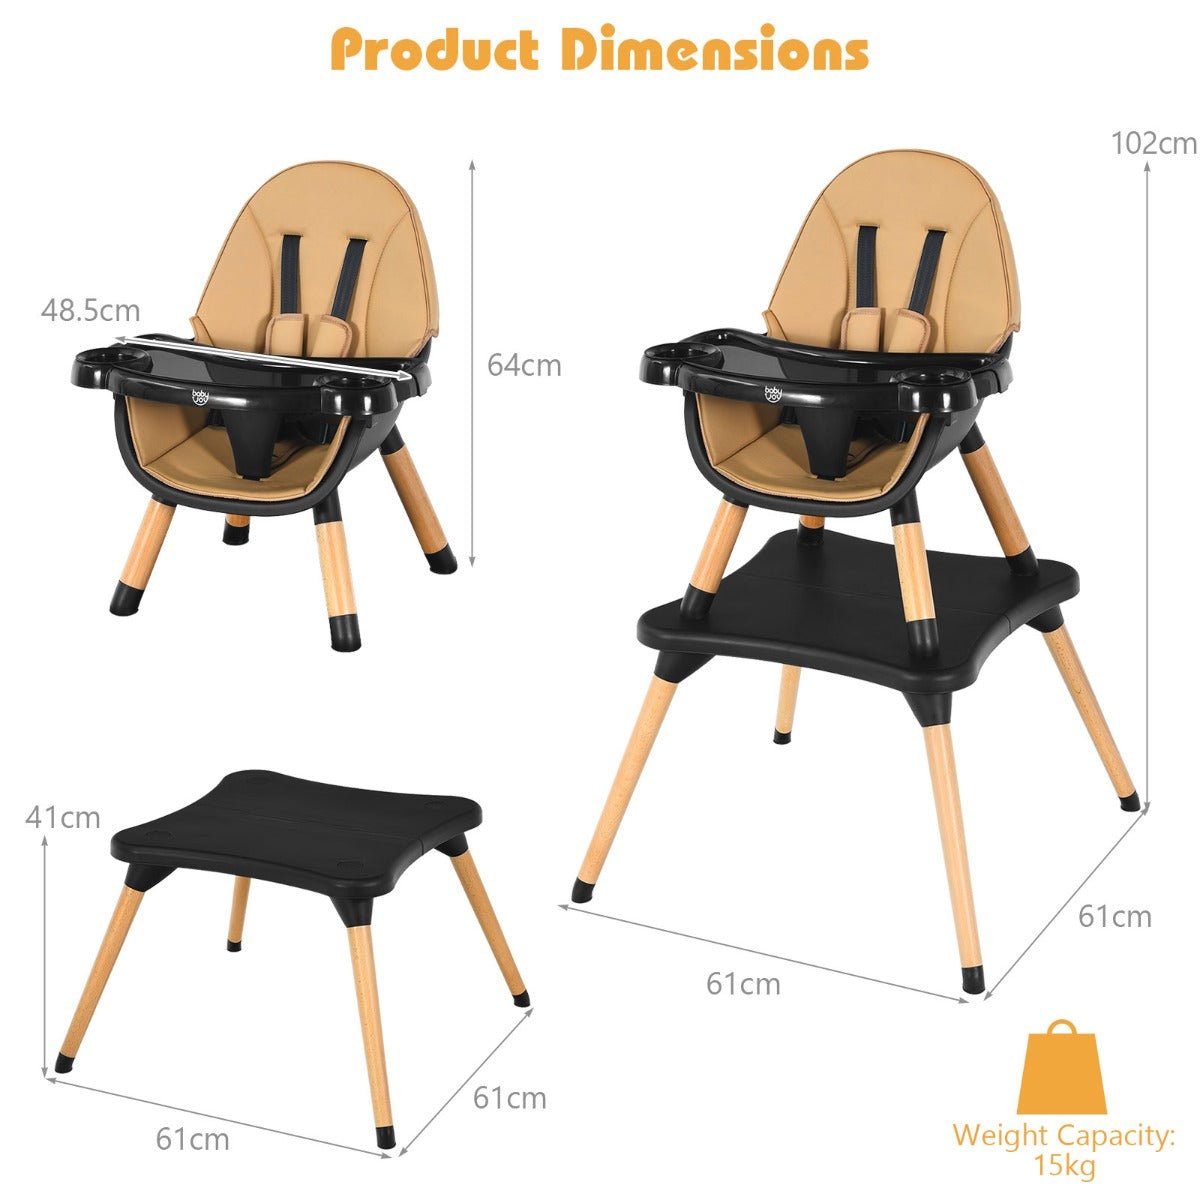 Versatile Wooden High Chair - 5-in-1 Convertible Design, Coffee